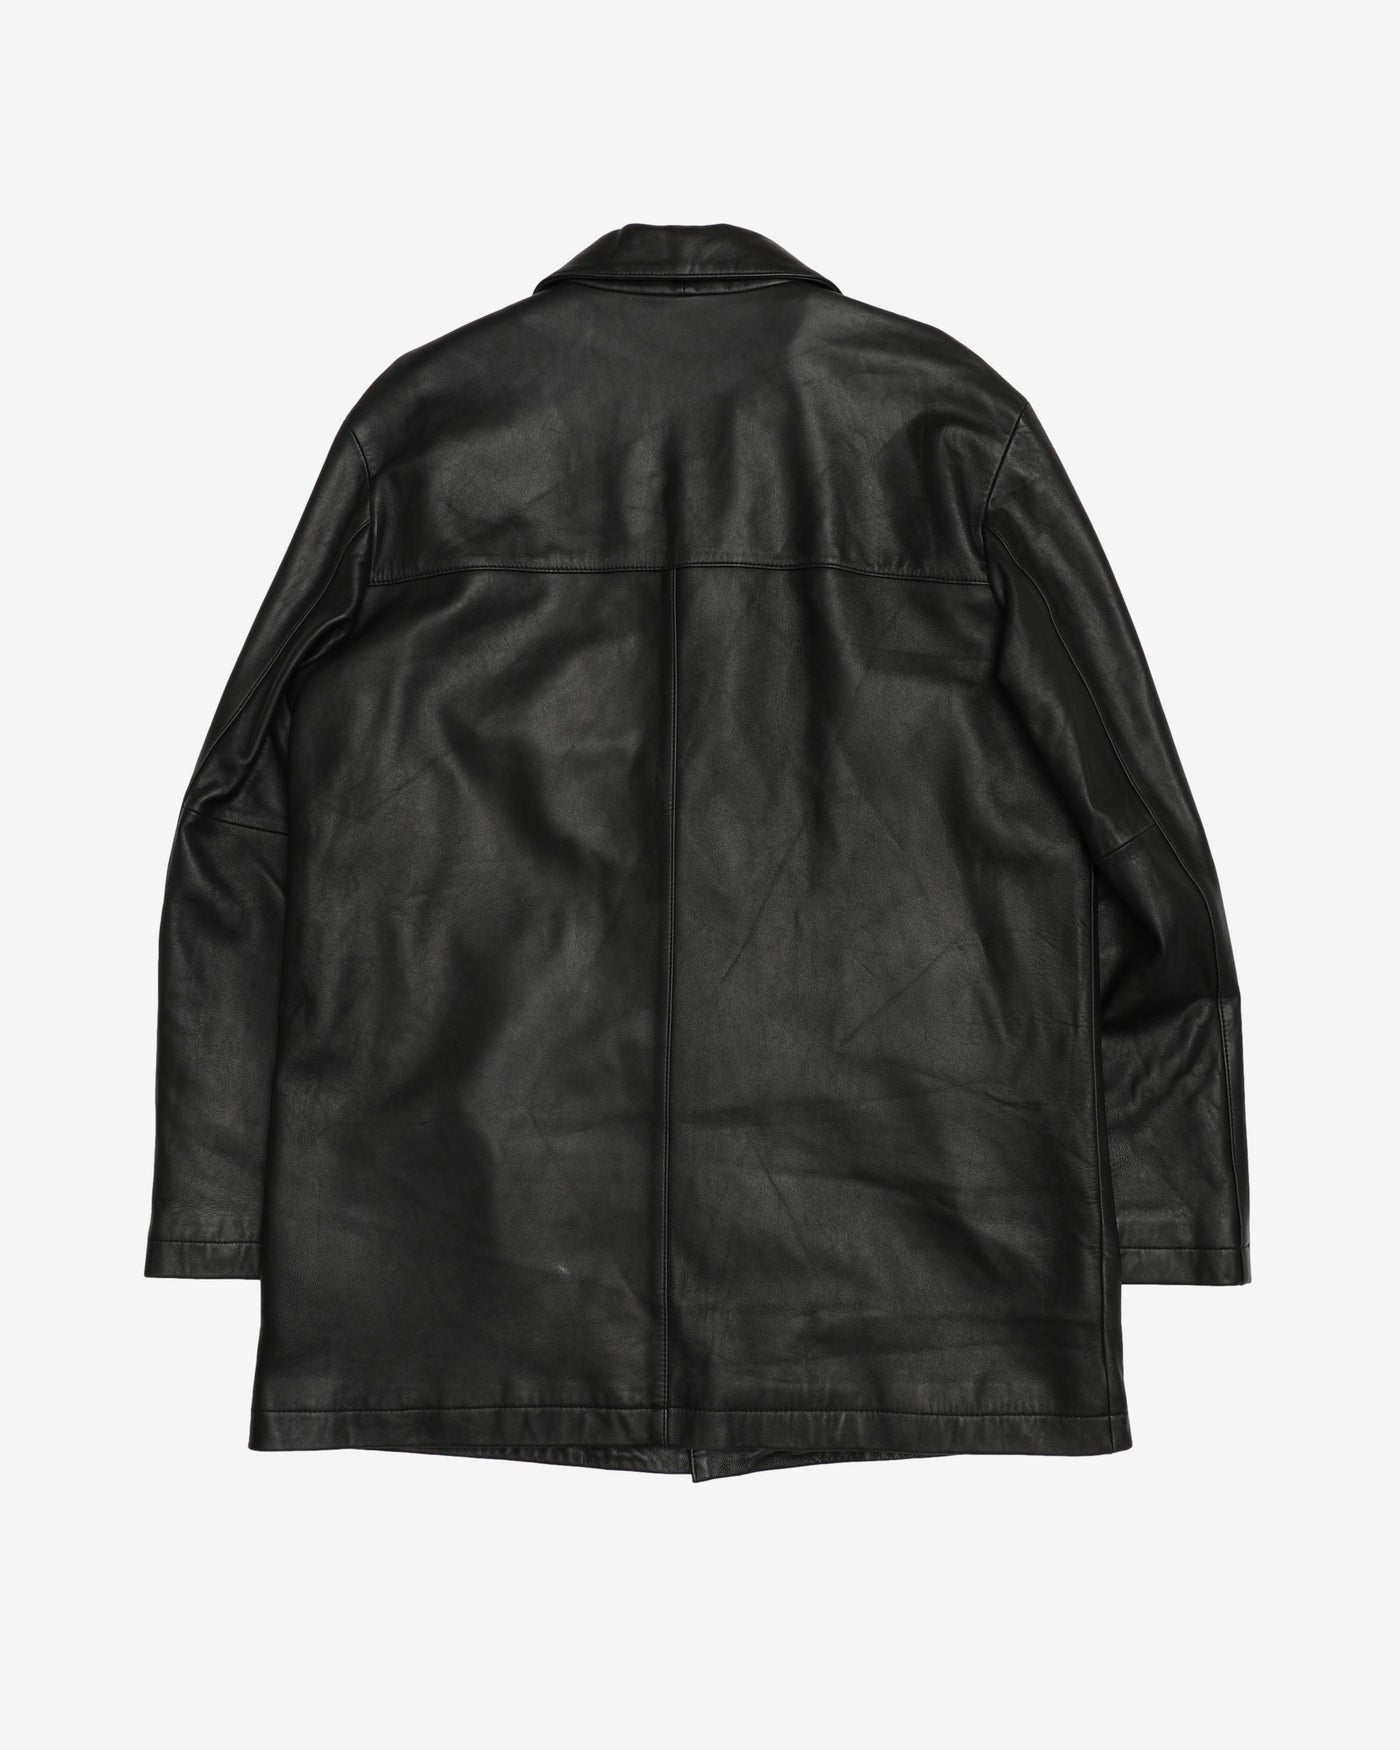 Coach Black Button Up Leather Jacket - M